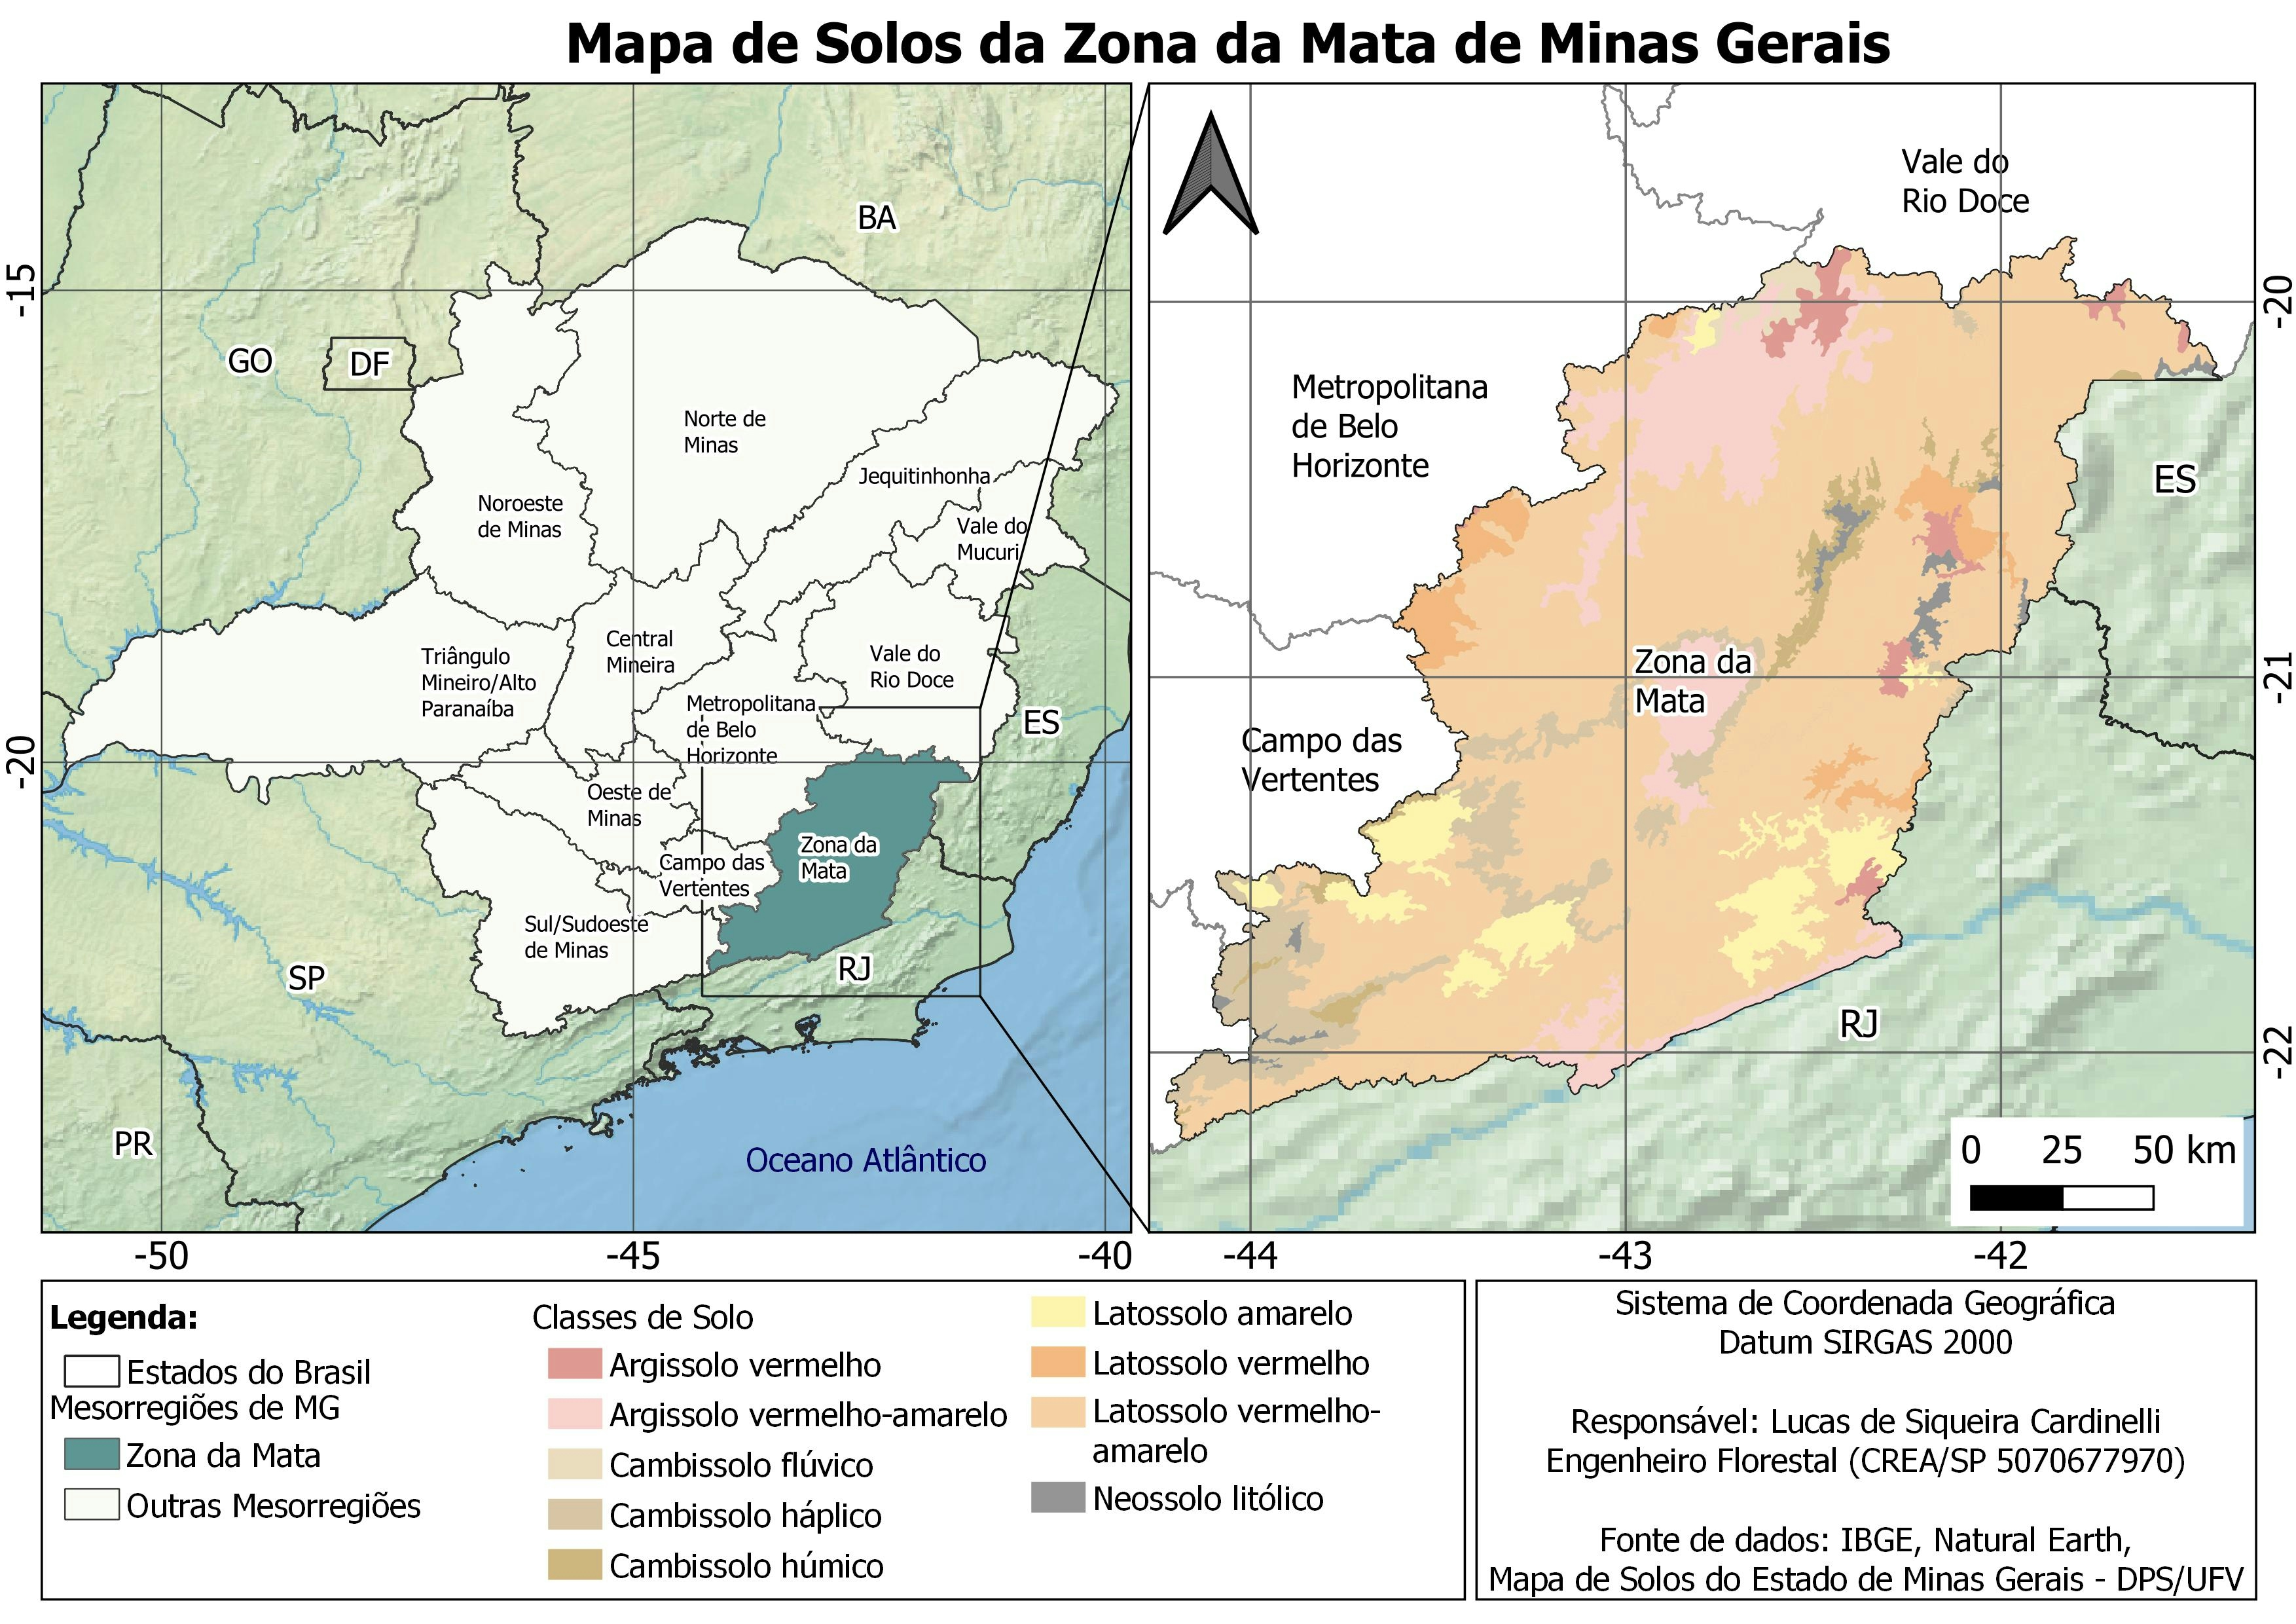 Mapa de Solos da Zona da Mata mineira